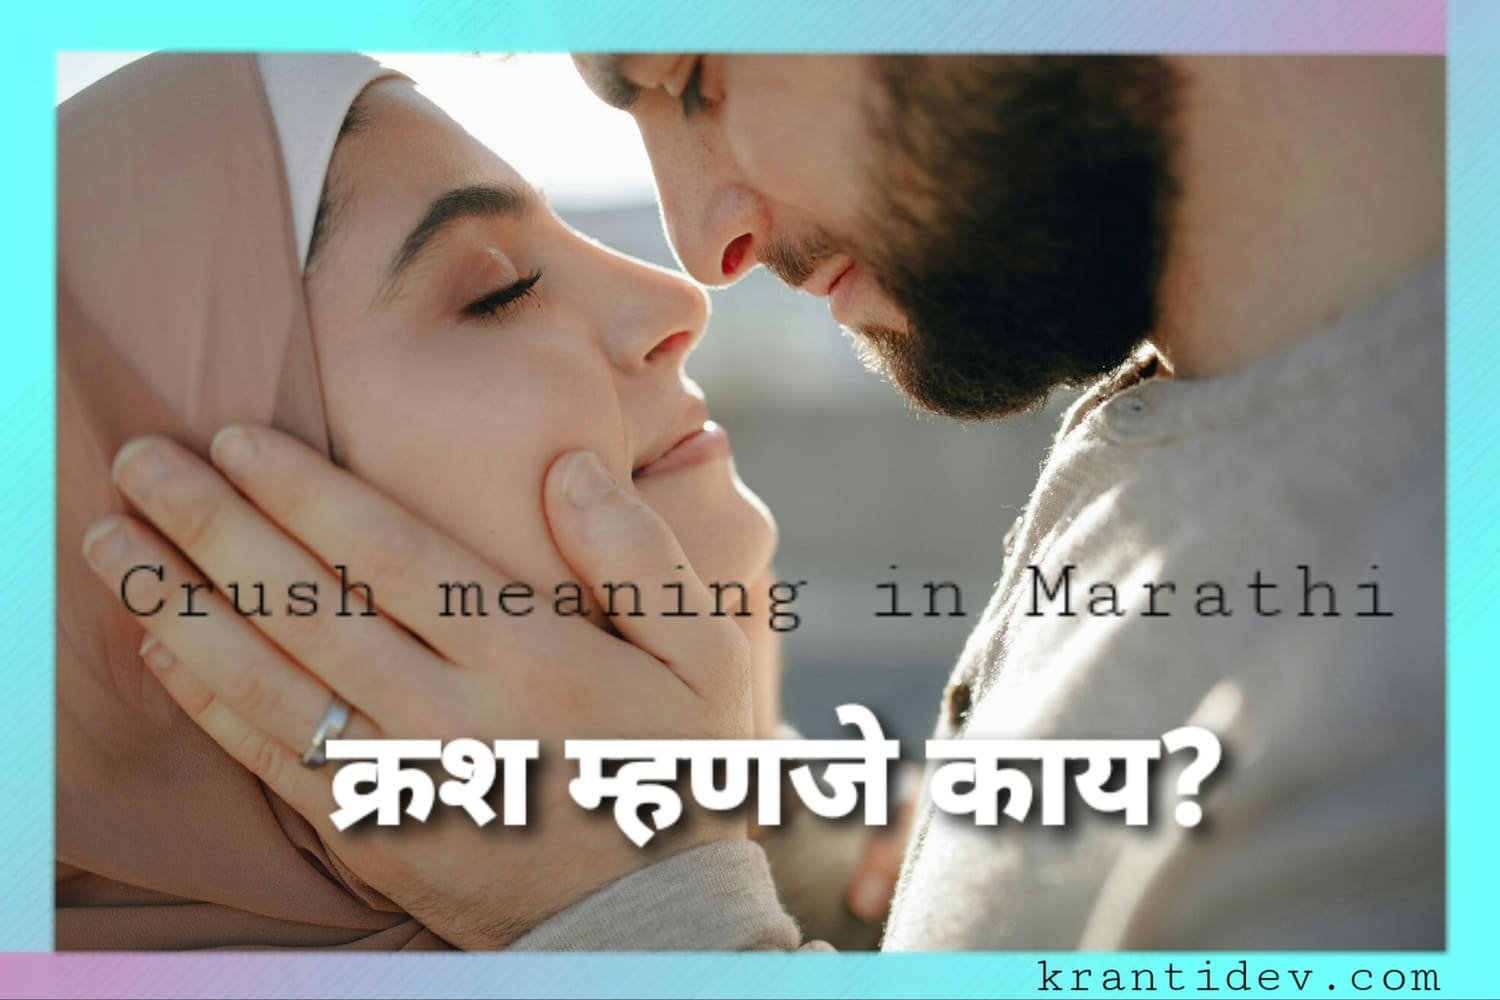 Crush meaning in Marathi